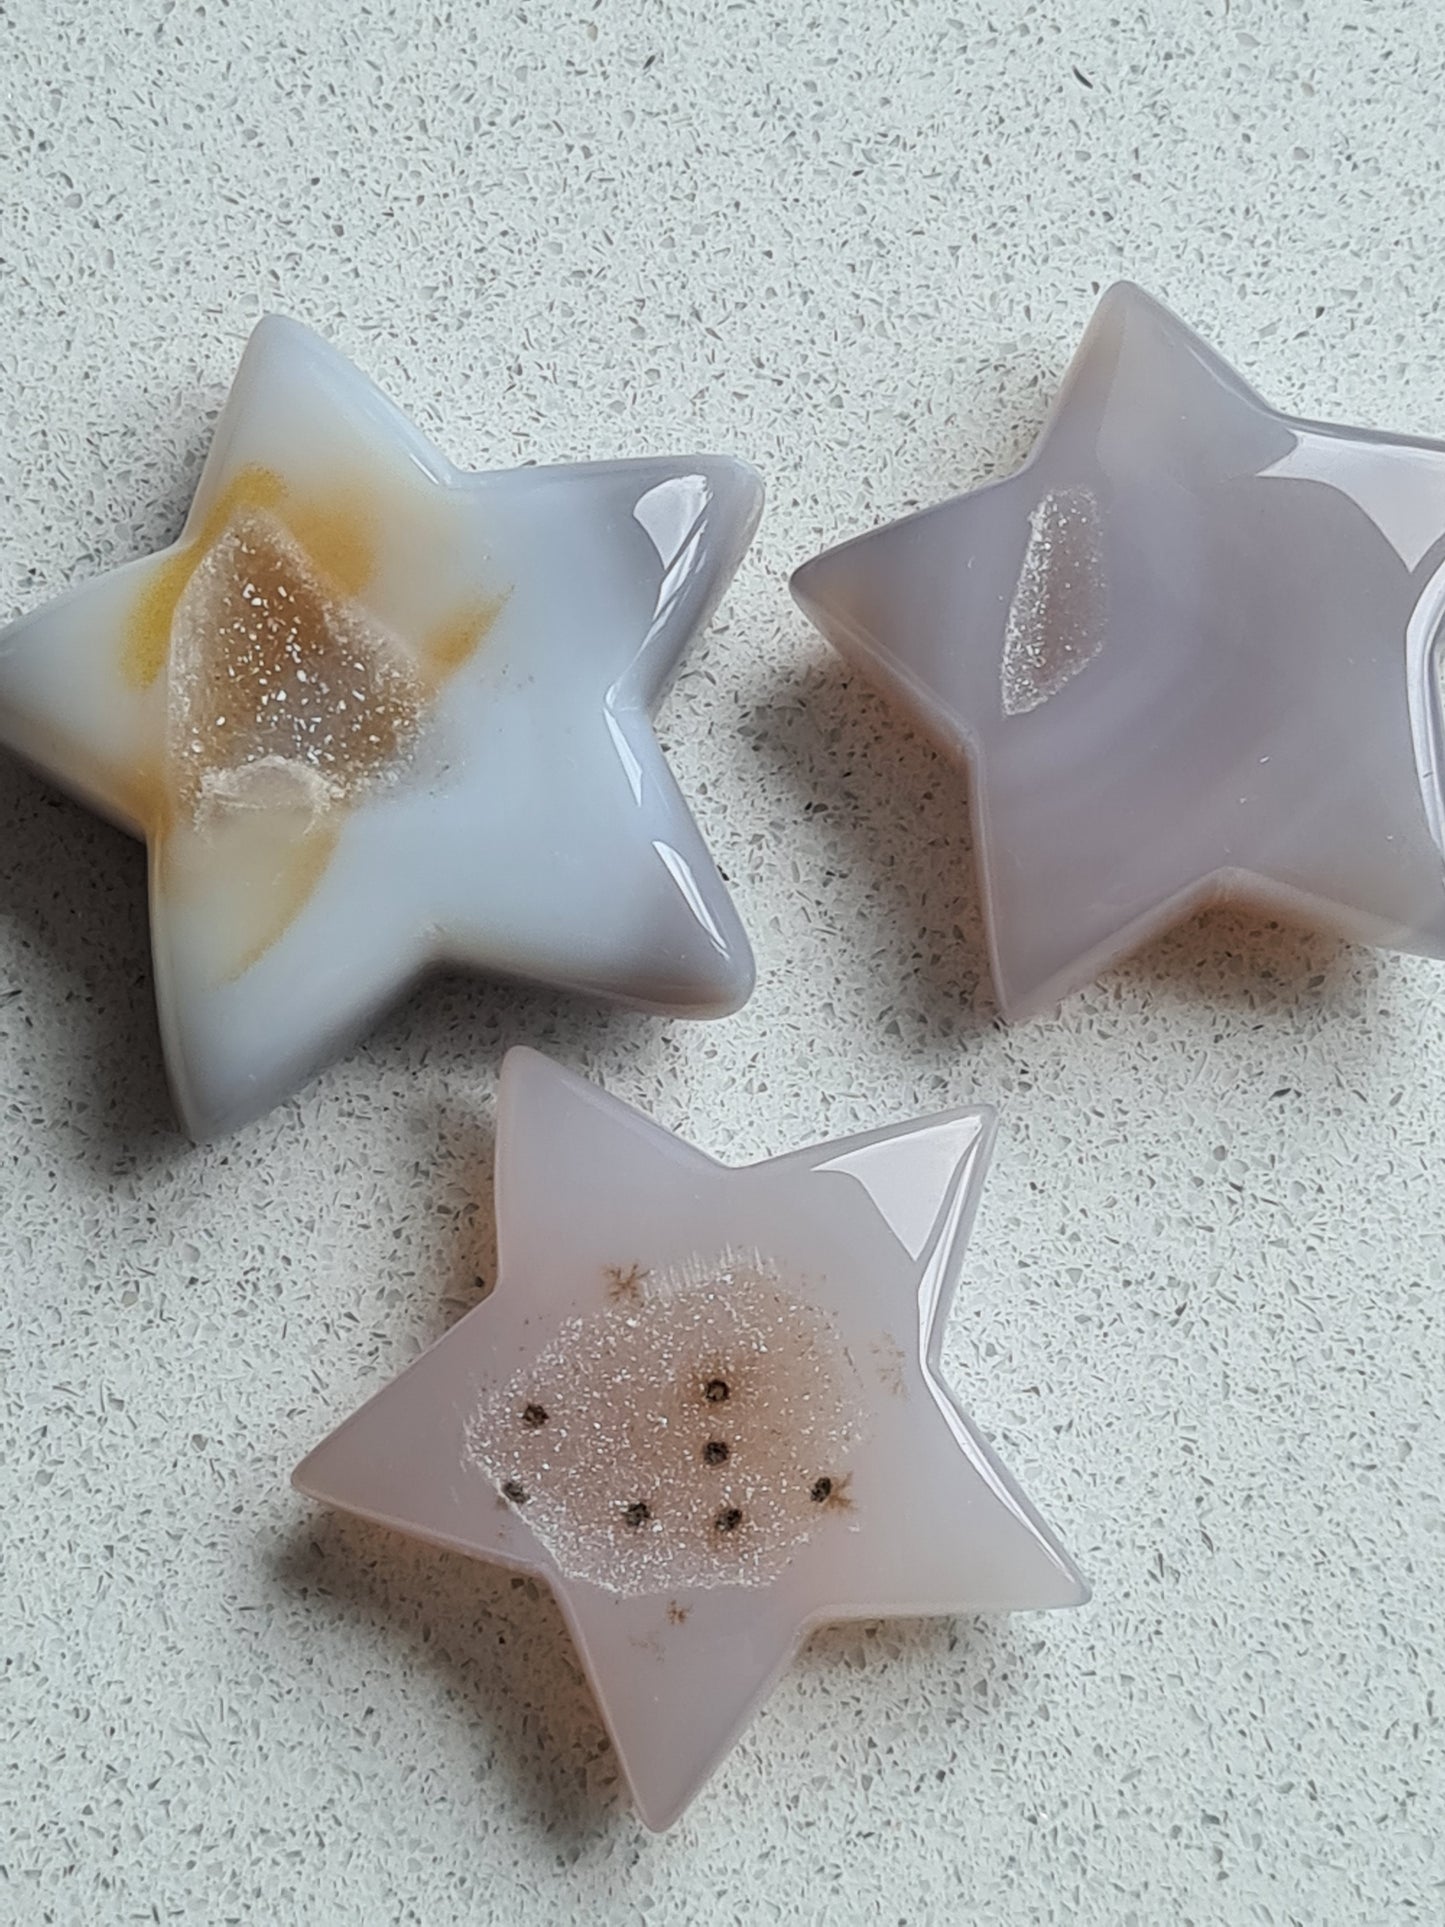 Three druzy agate stars in grey tones with clear quartz druzy on a white background